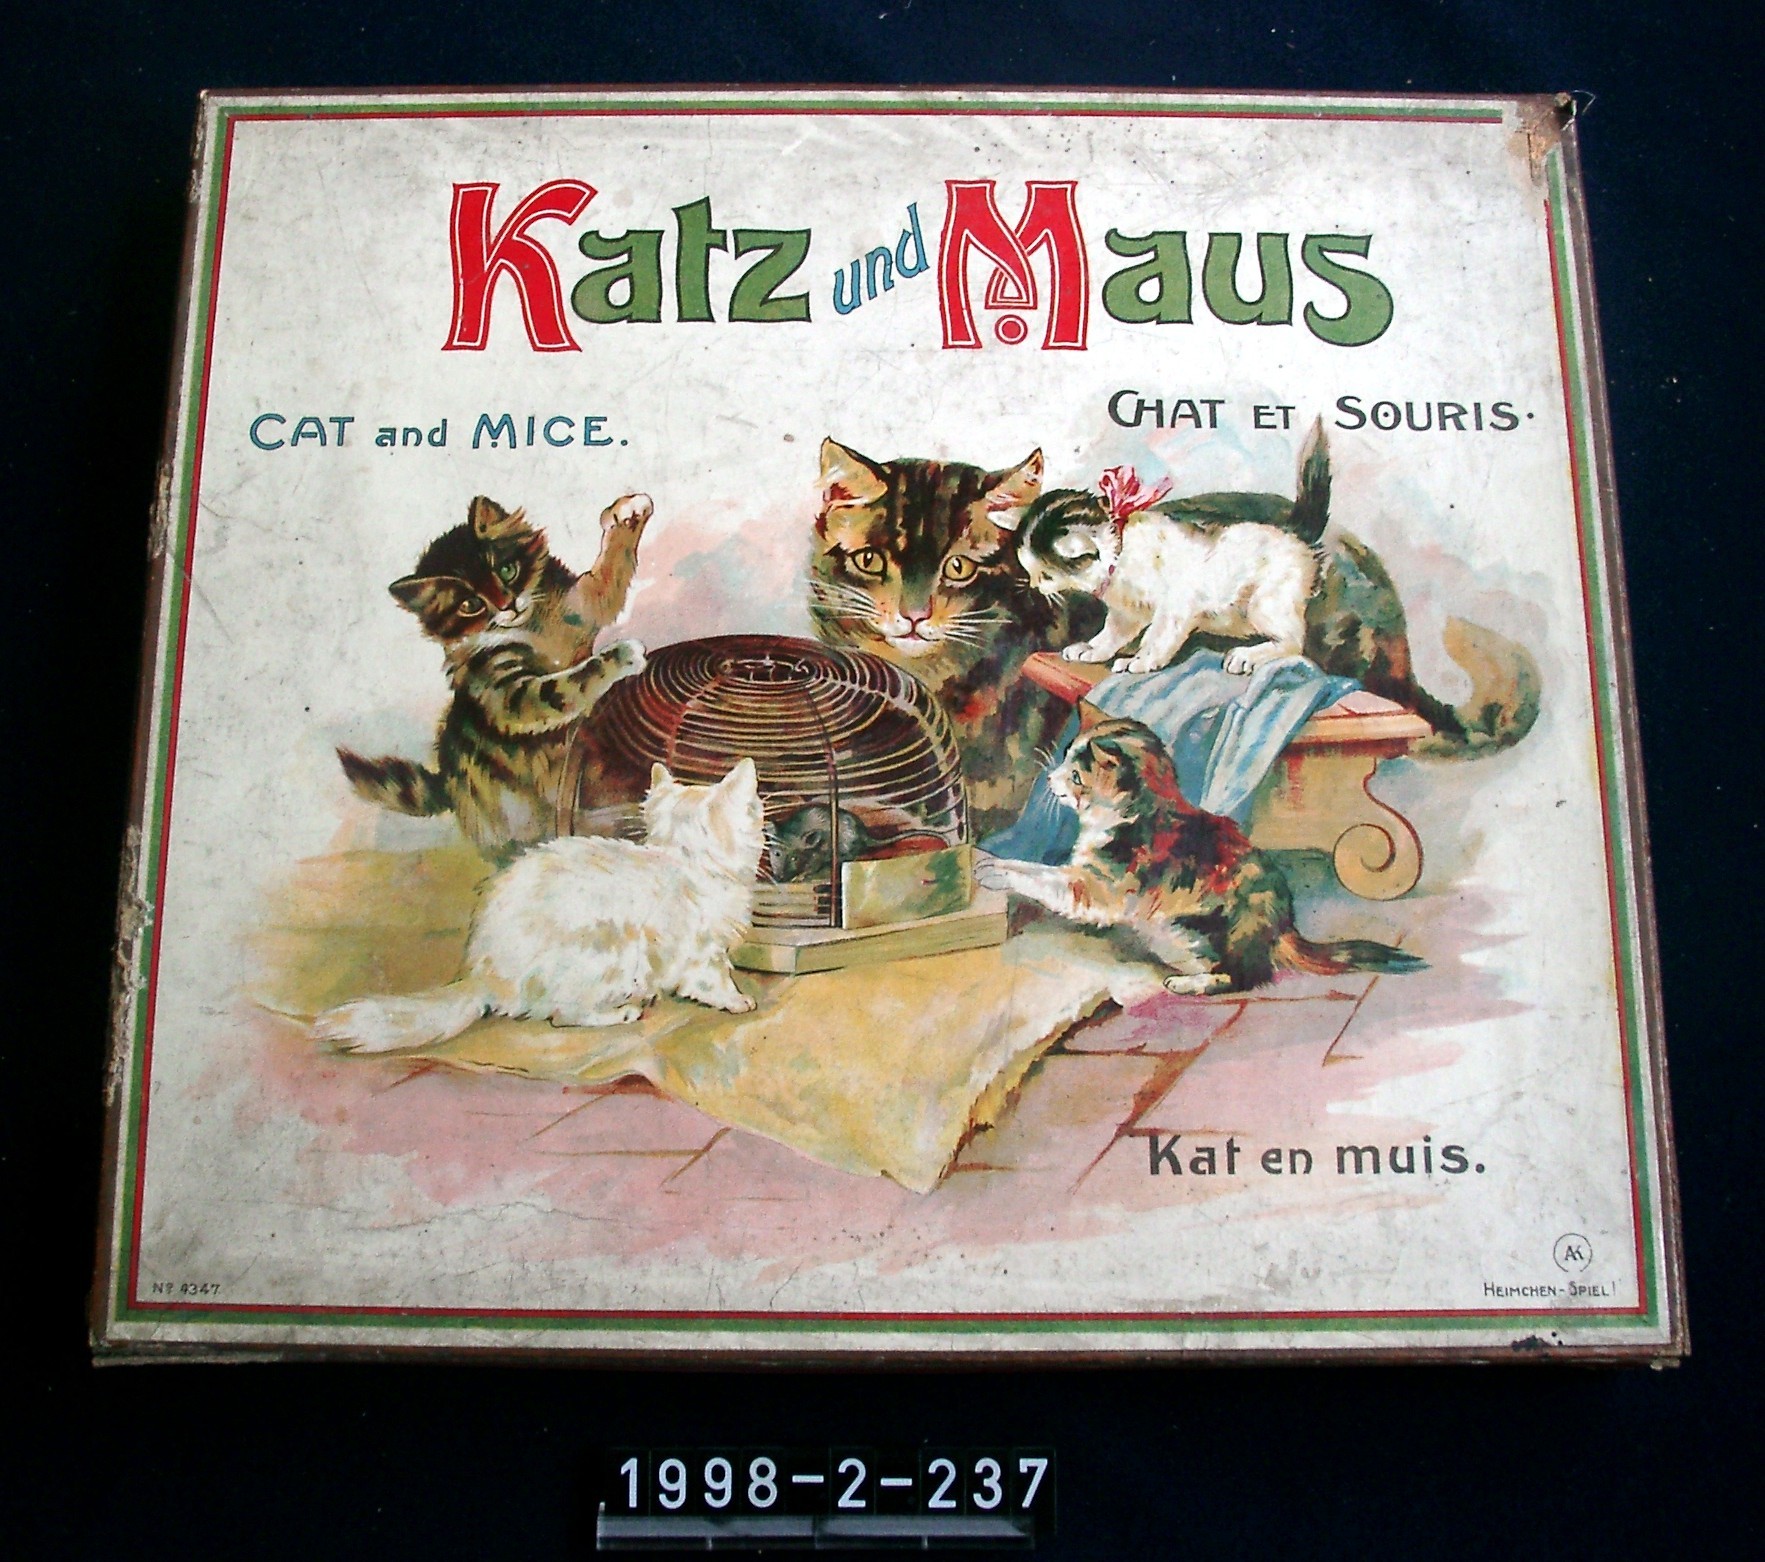 Spielschachtel mit Spiel "Katz und Maus"; um 1890 (Stadtmuseum Bad Dürkheim, Museumsgesellschaft Bad Dürkheim e.V. CC BY-NC-SA)